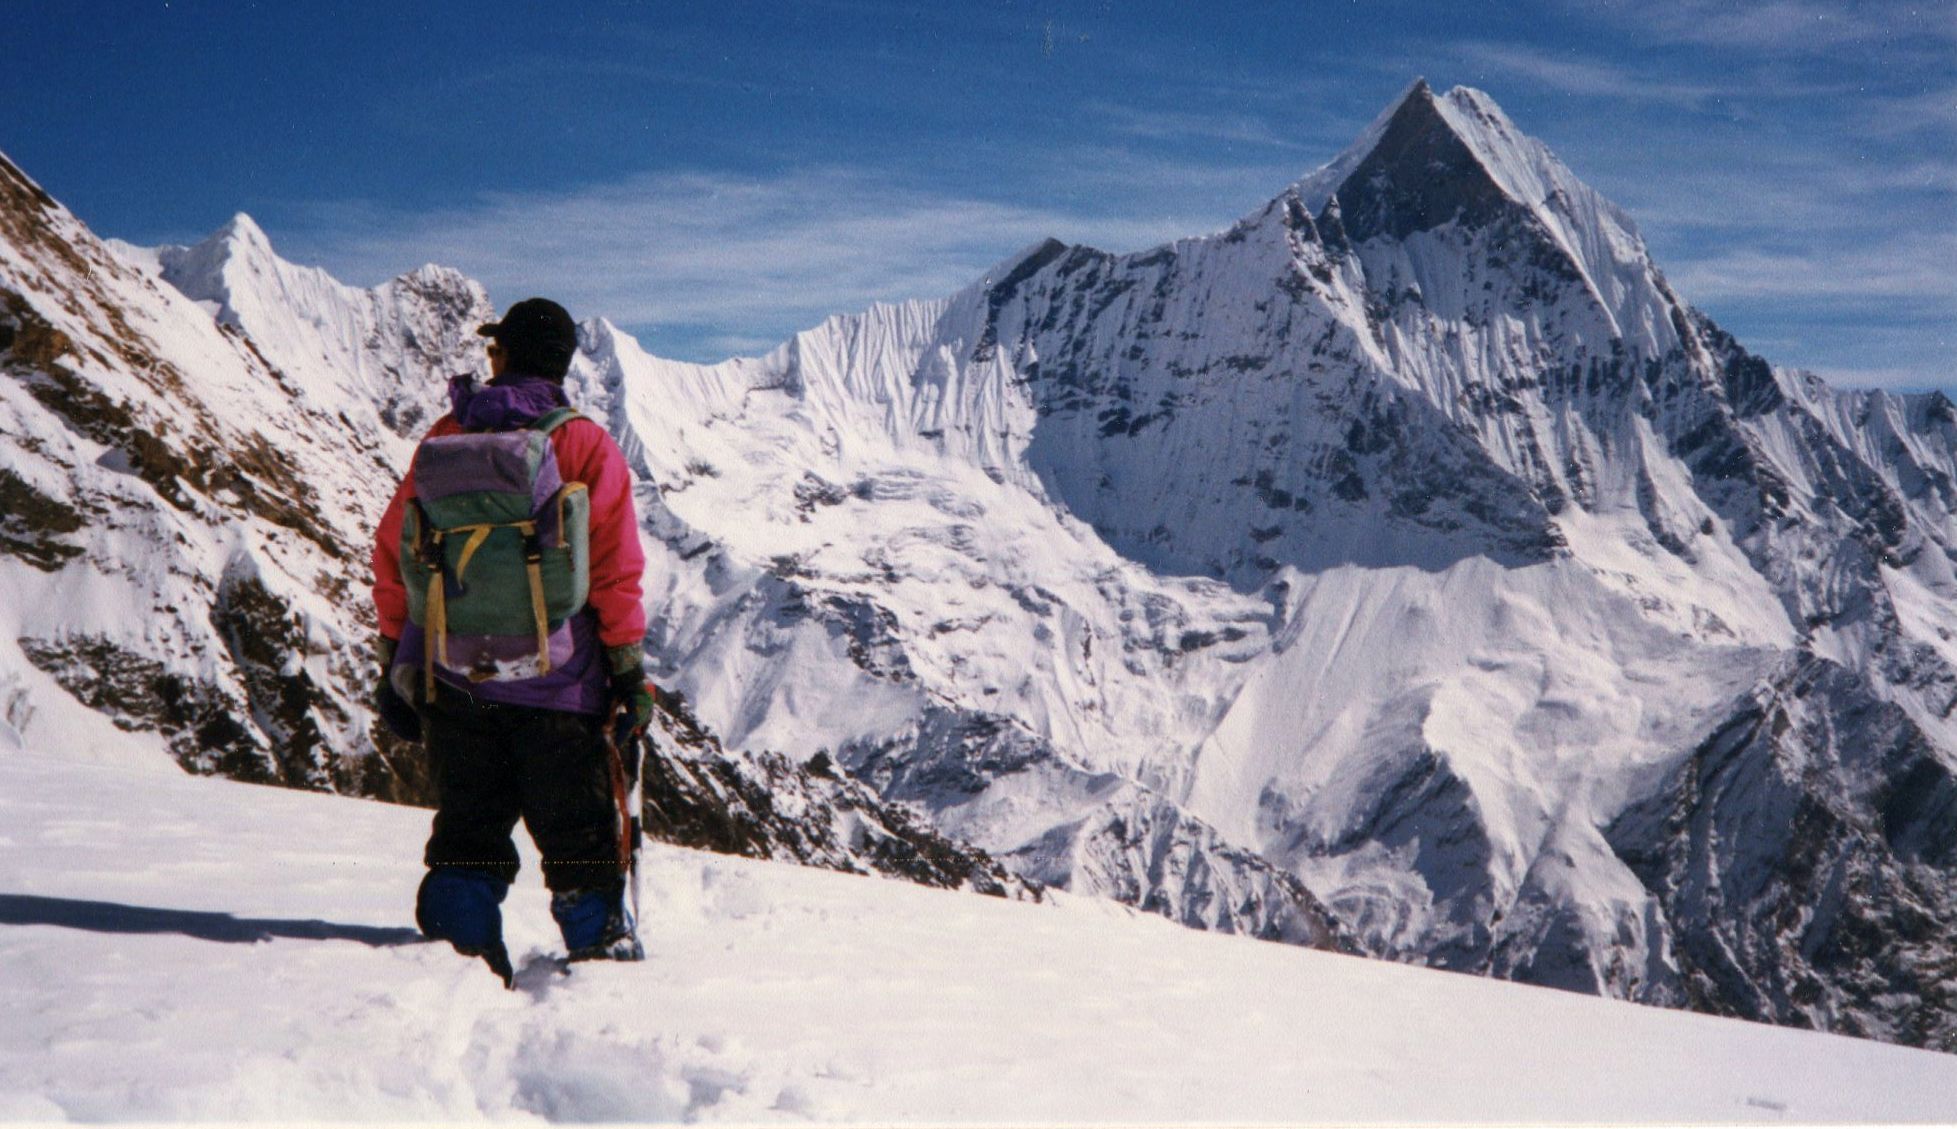 Macchapucchre, the Fishtail Mountain above Annapurna Sanctuary